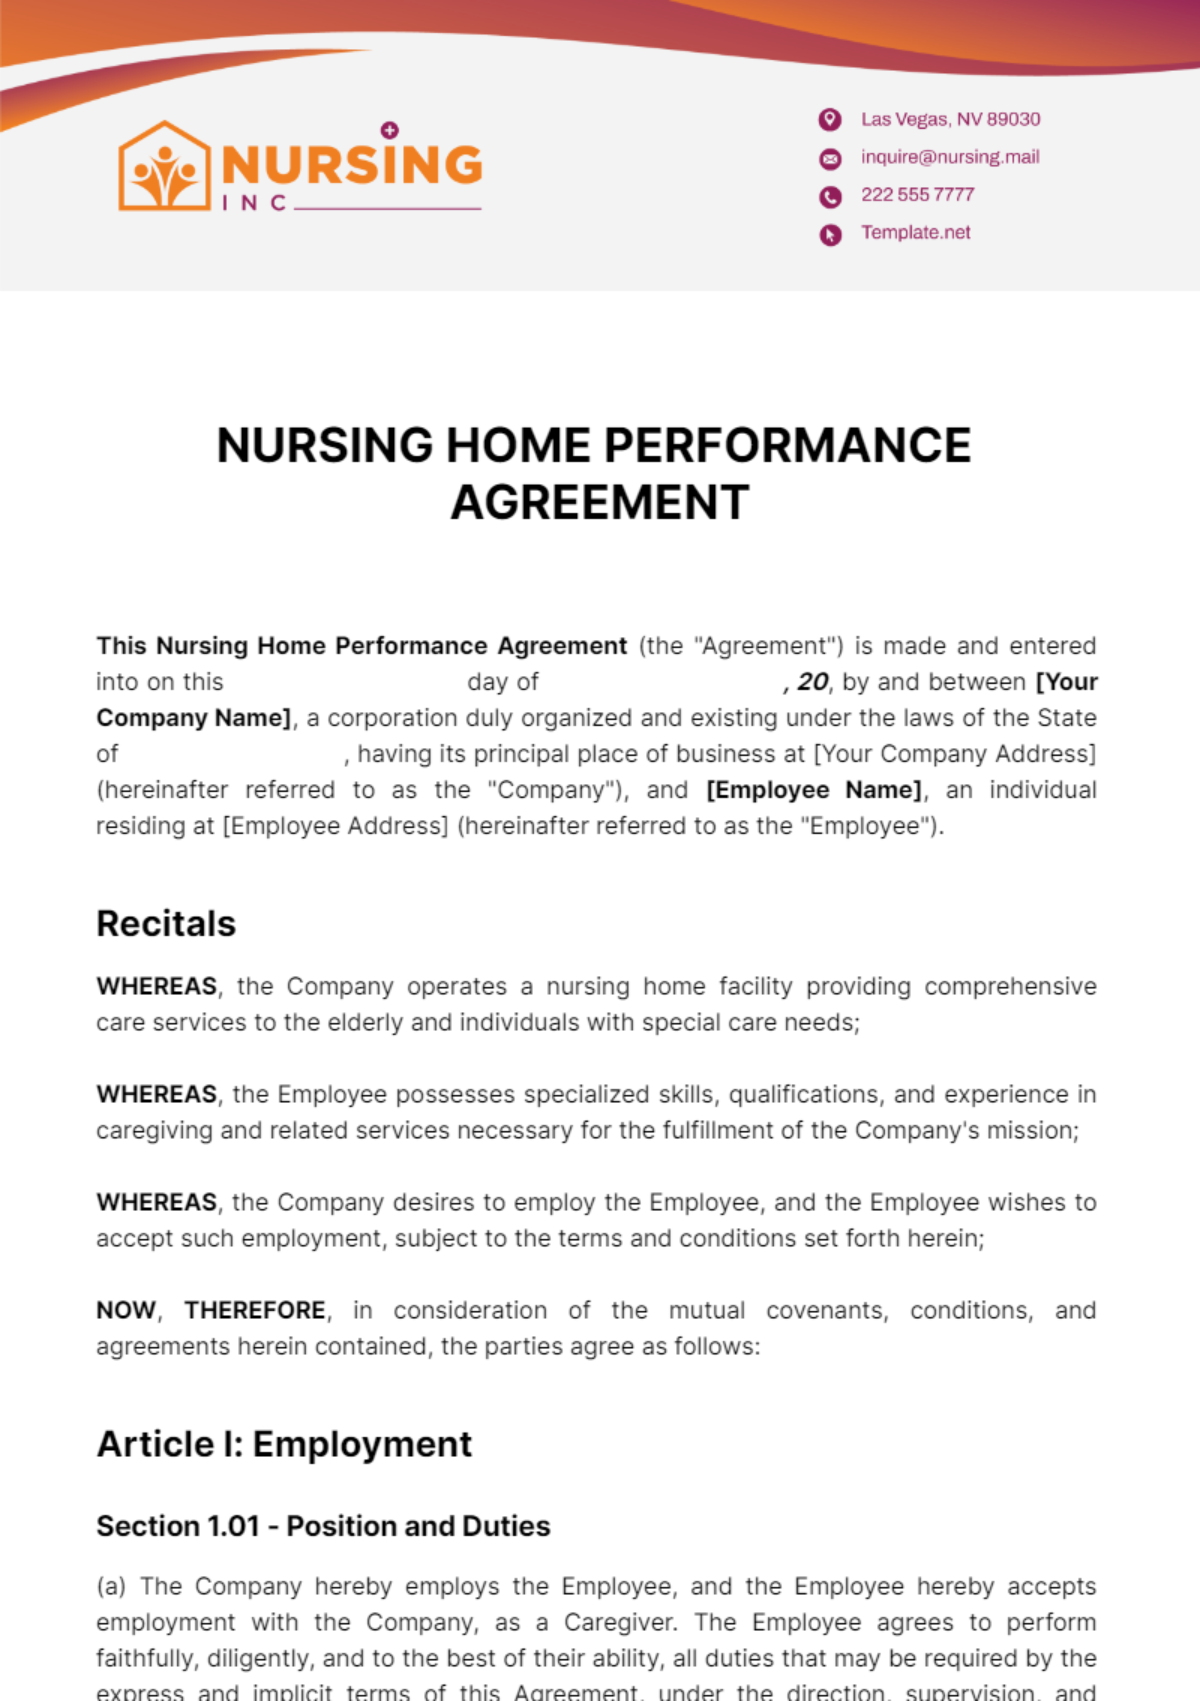 Nursing Home Performance Agreement Template